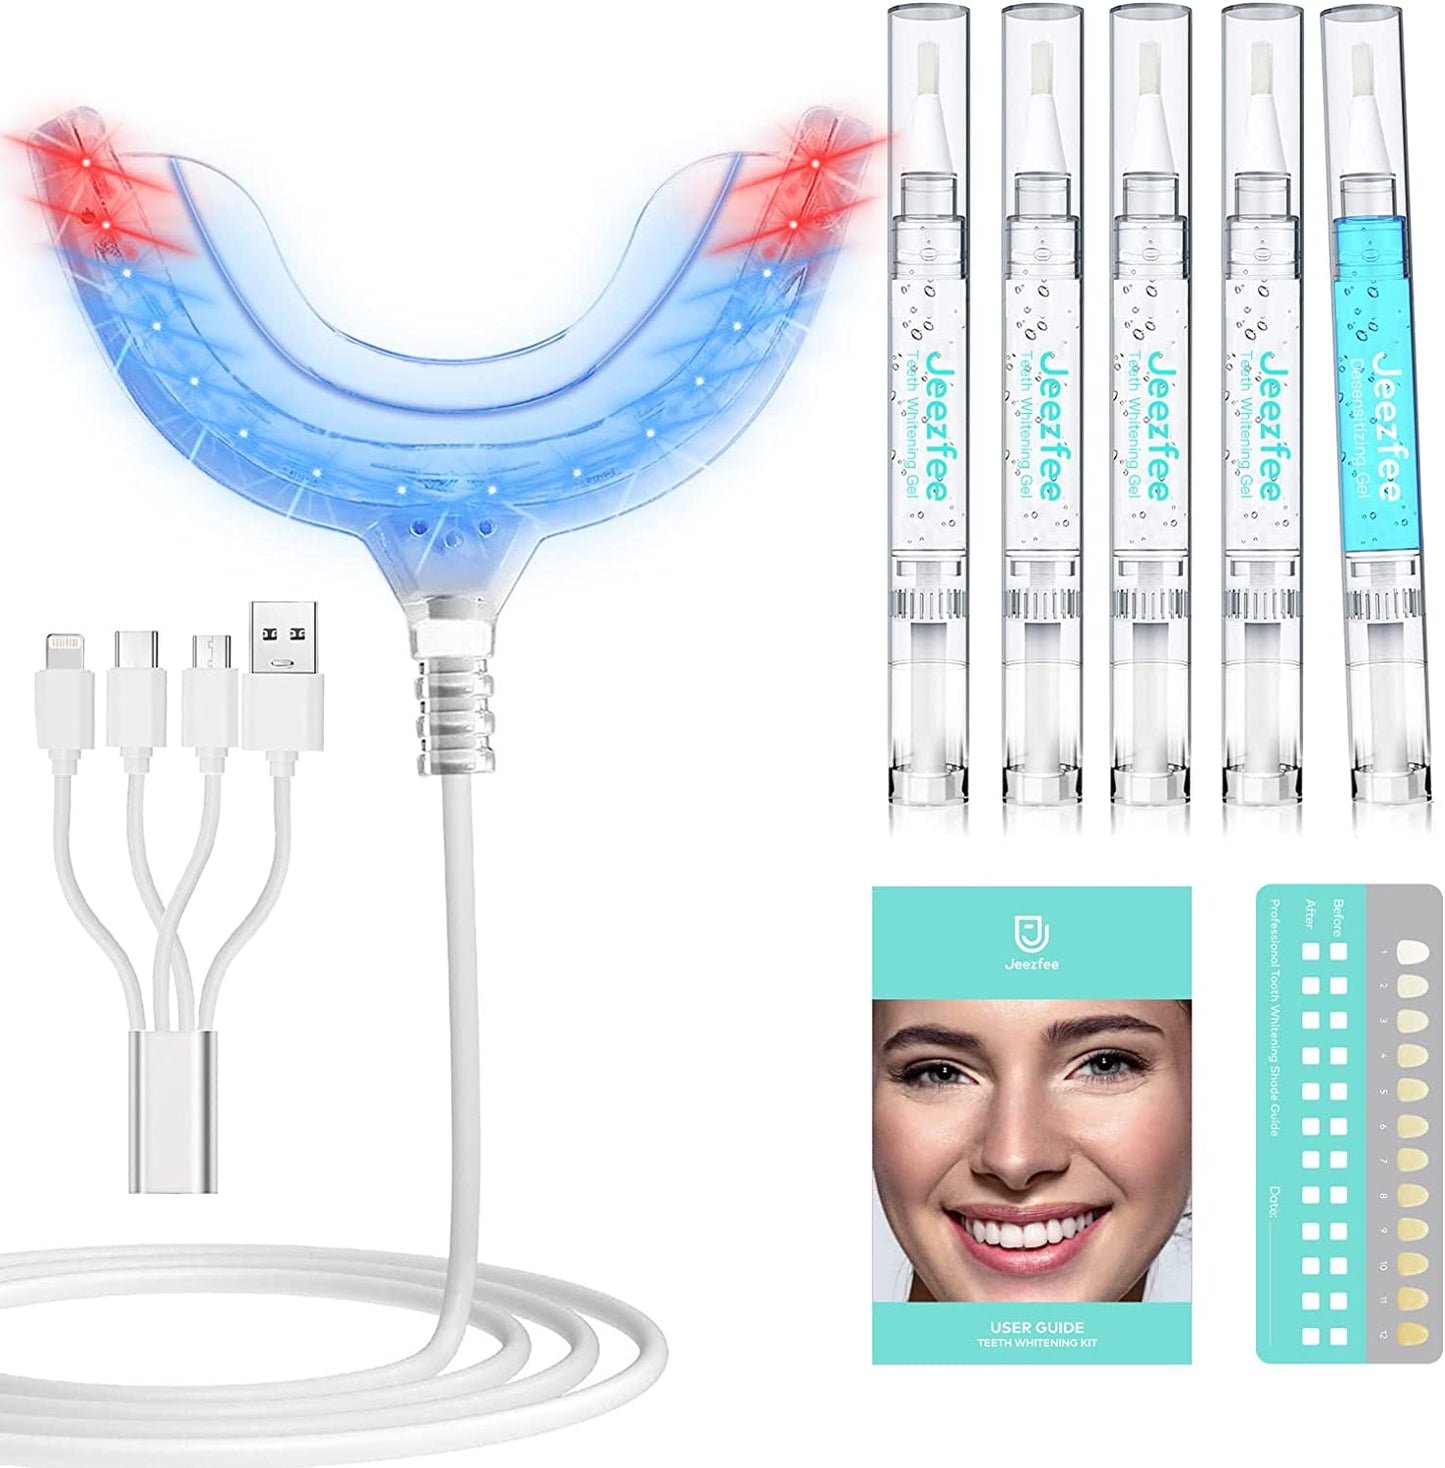 MayBeau teeth whitening kit